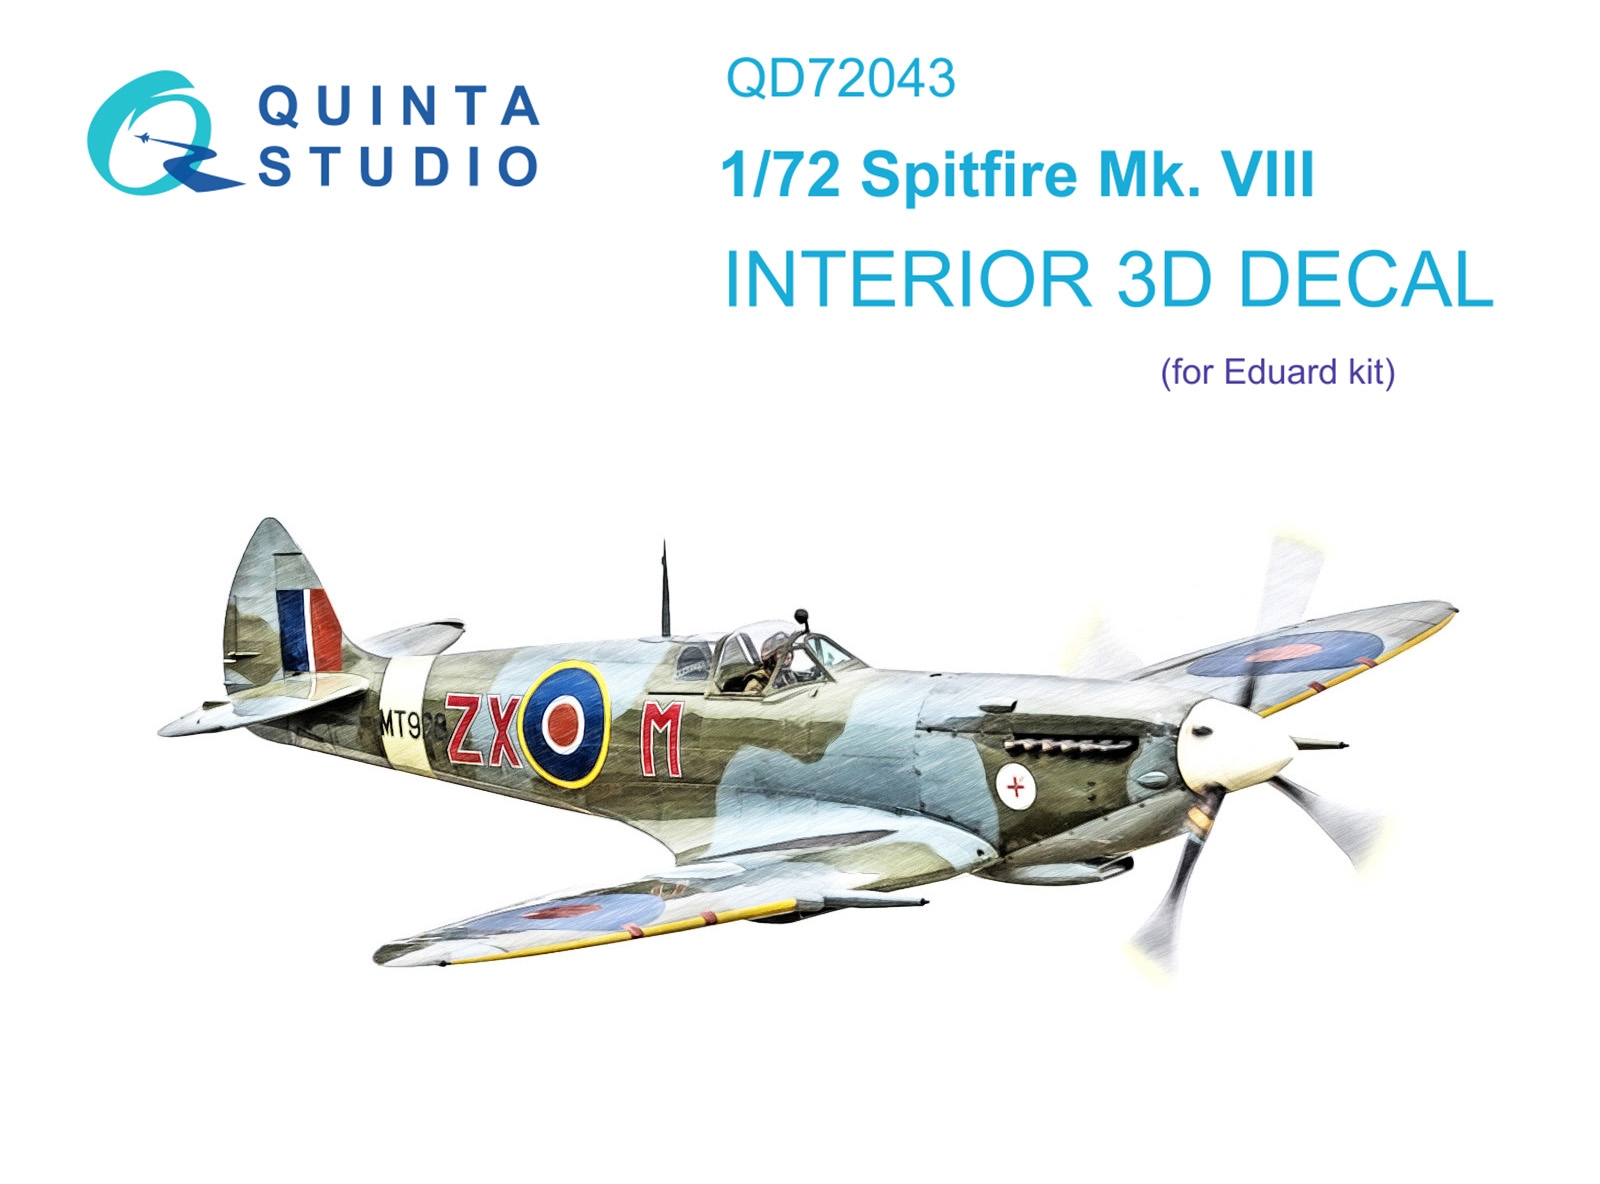 Quinta Studio 1/72 Spitfire Mk. VIII 3D Interior decal #72043 (for Eduard Kit)